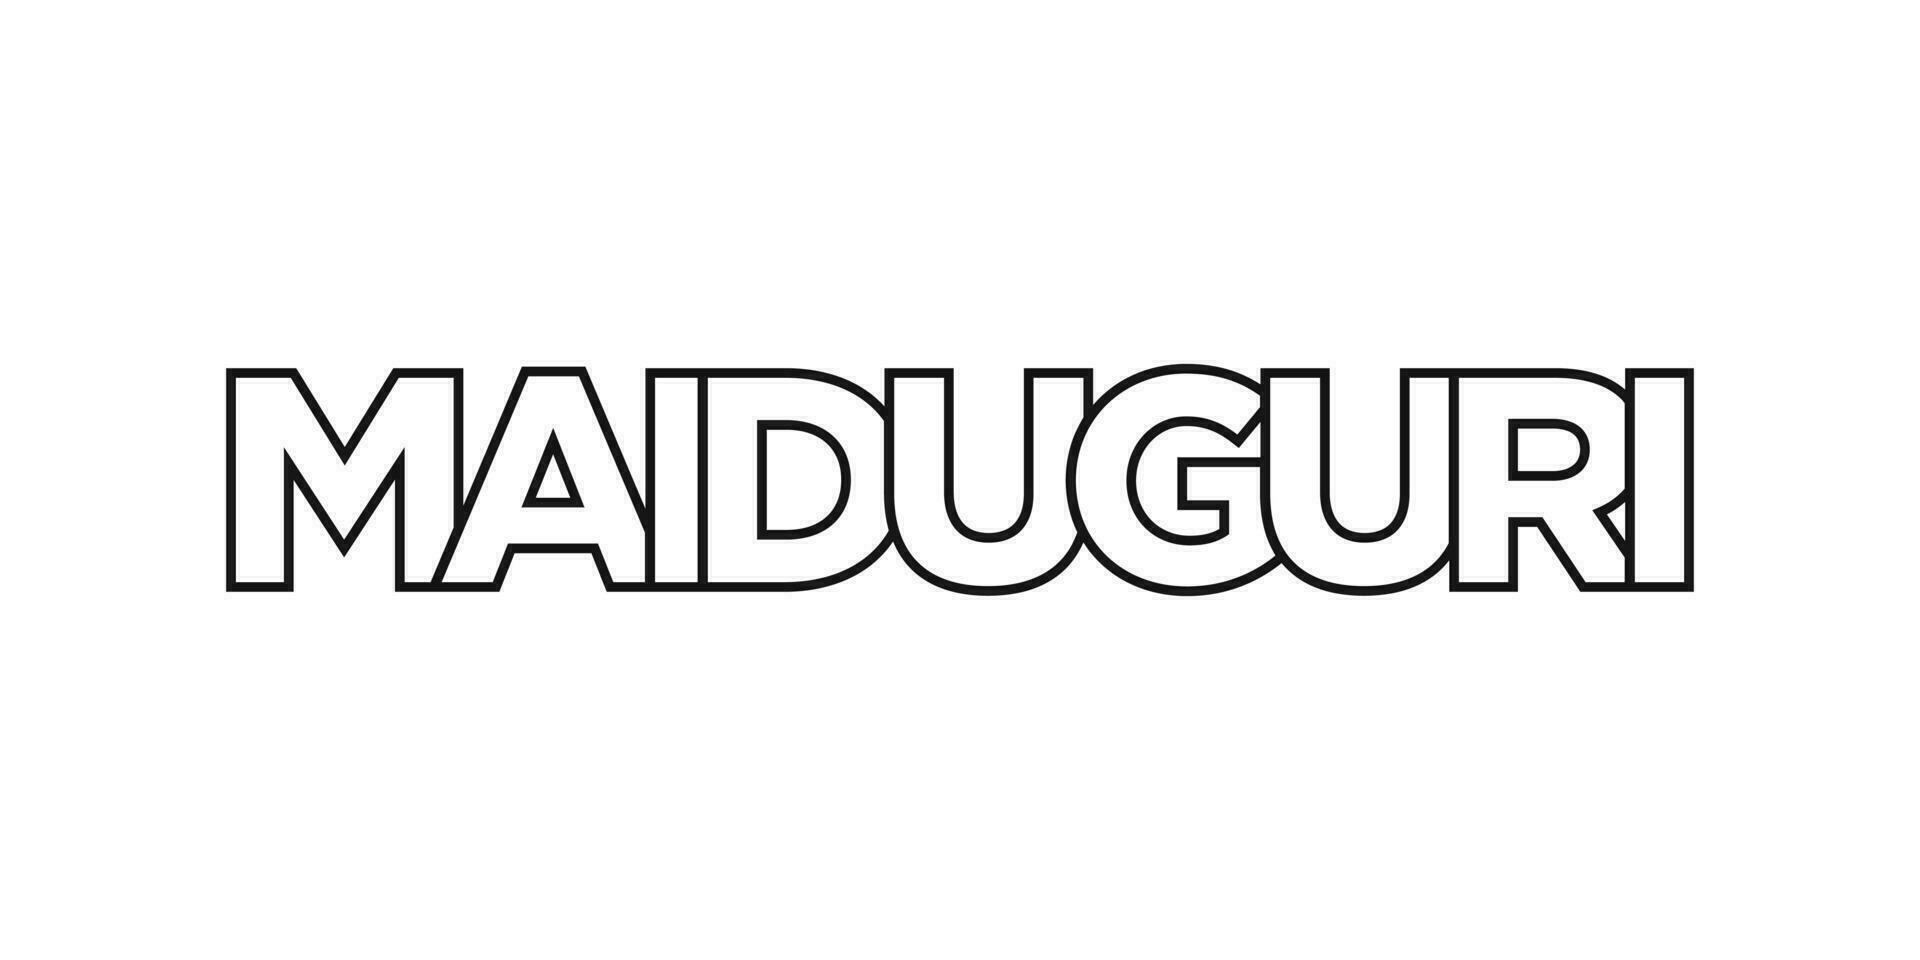 maiduguri i de nigeria emblem. de design funktioner en geometrisk stil, vektor illustration med djärv typografi i en modern font. de grafisk slogan text.